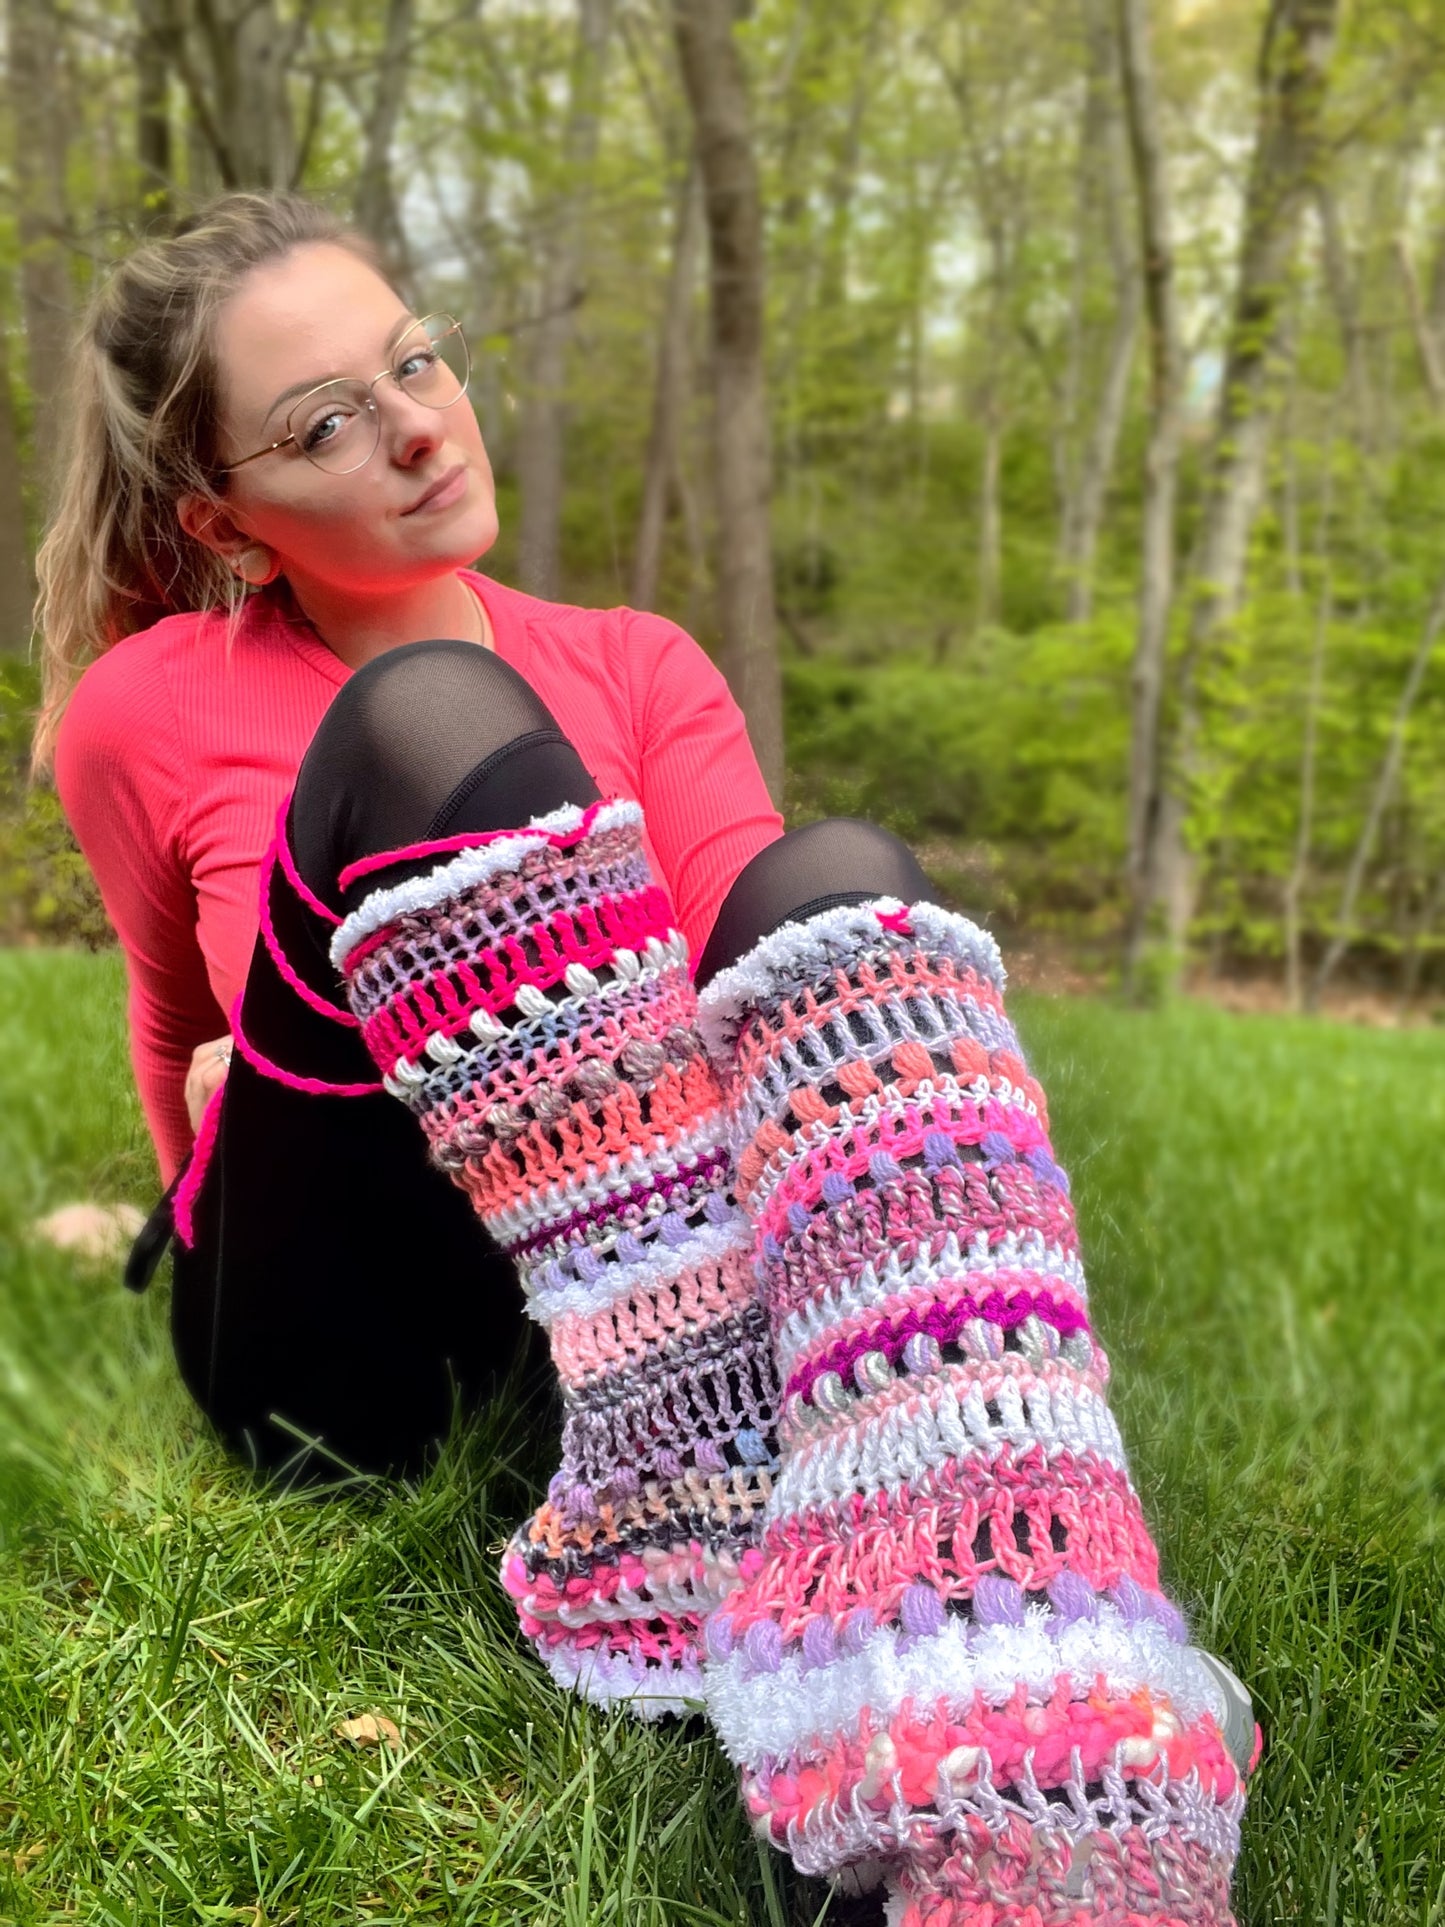 The Fairy Flares Pattern - Digital Download - Crochet Leg Warmers